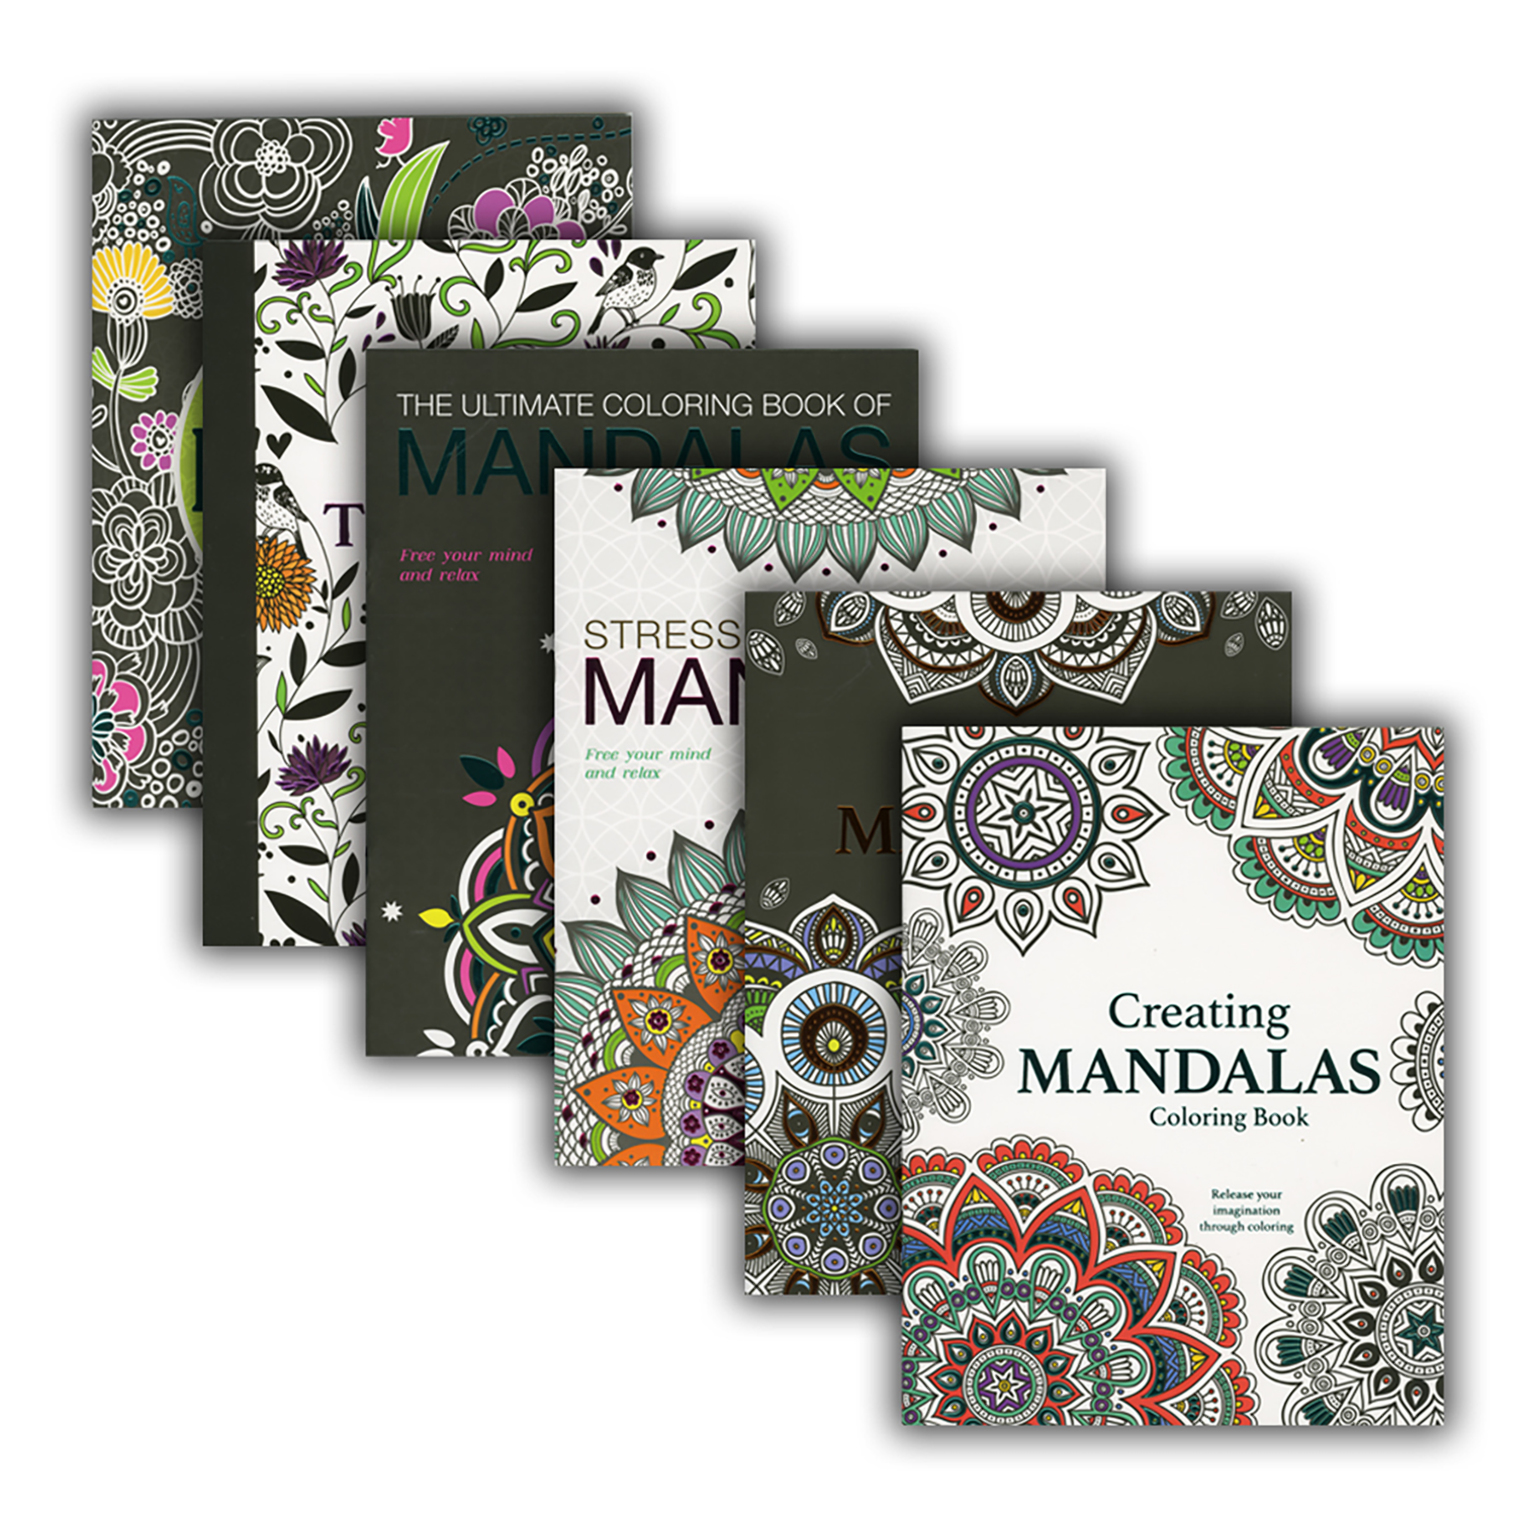 20 Bulk Rounded Mandala Adult Coloring Graphic by zohuraakter524